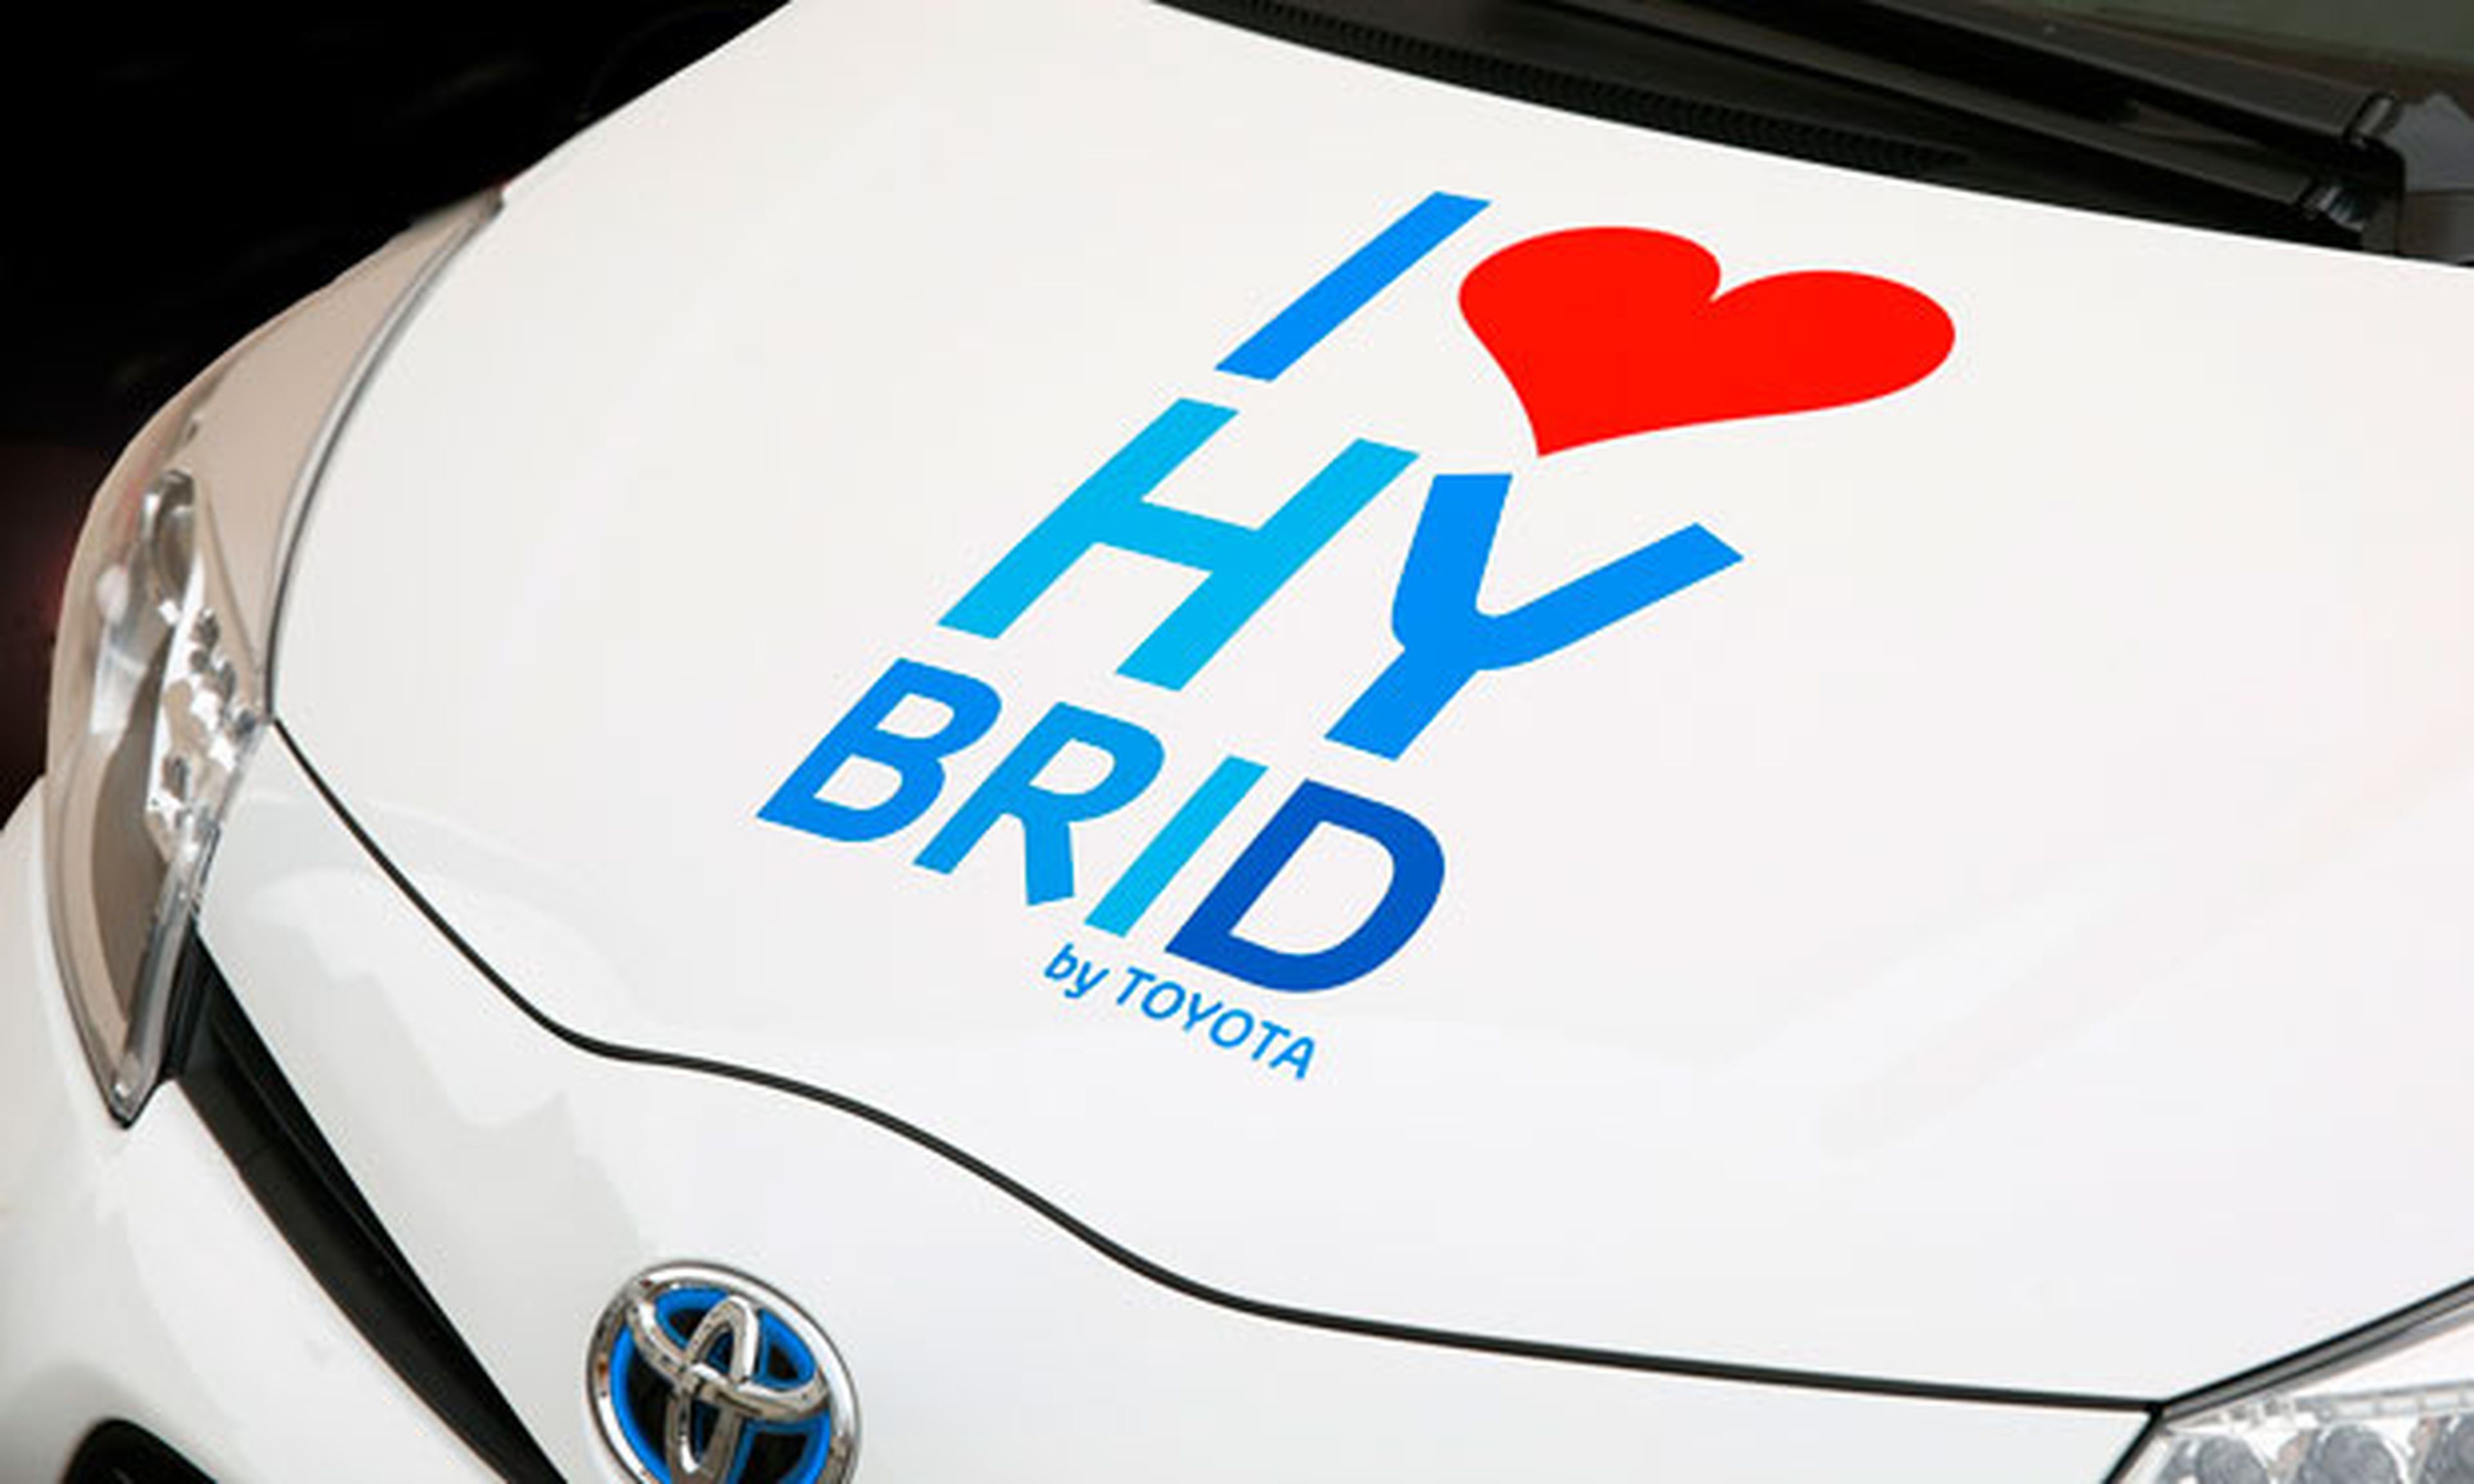 I love hybrid